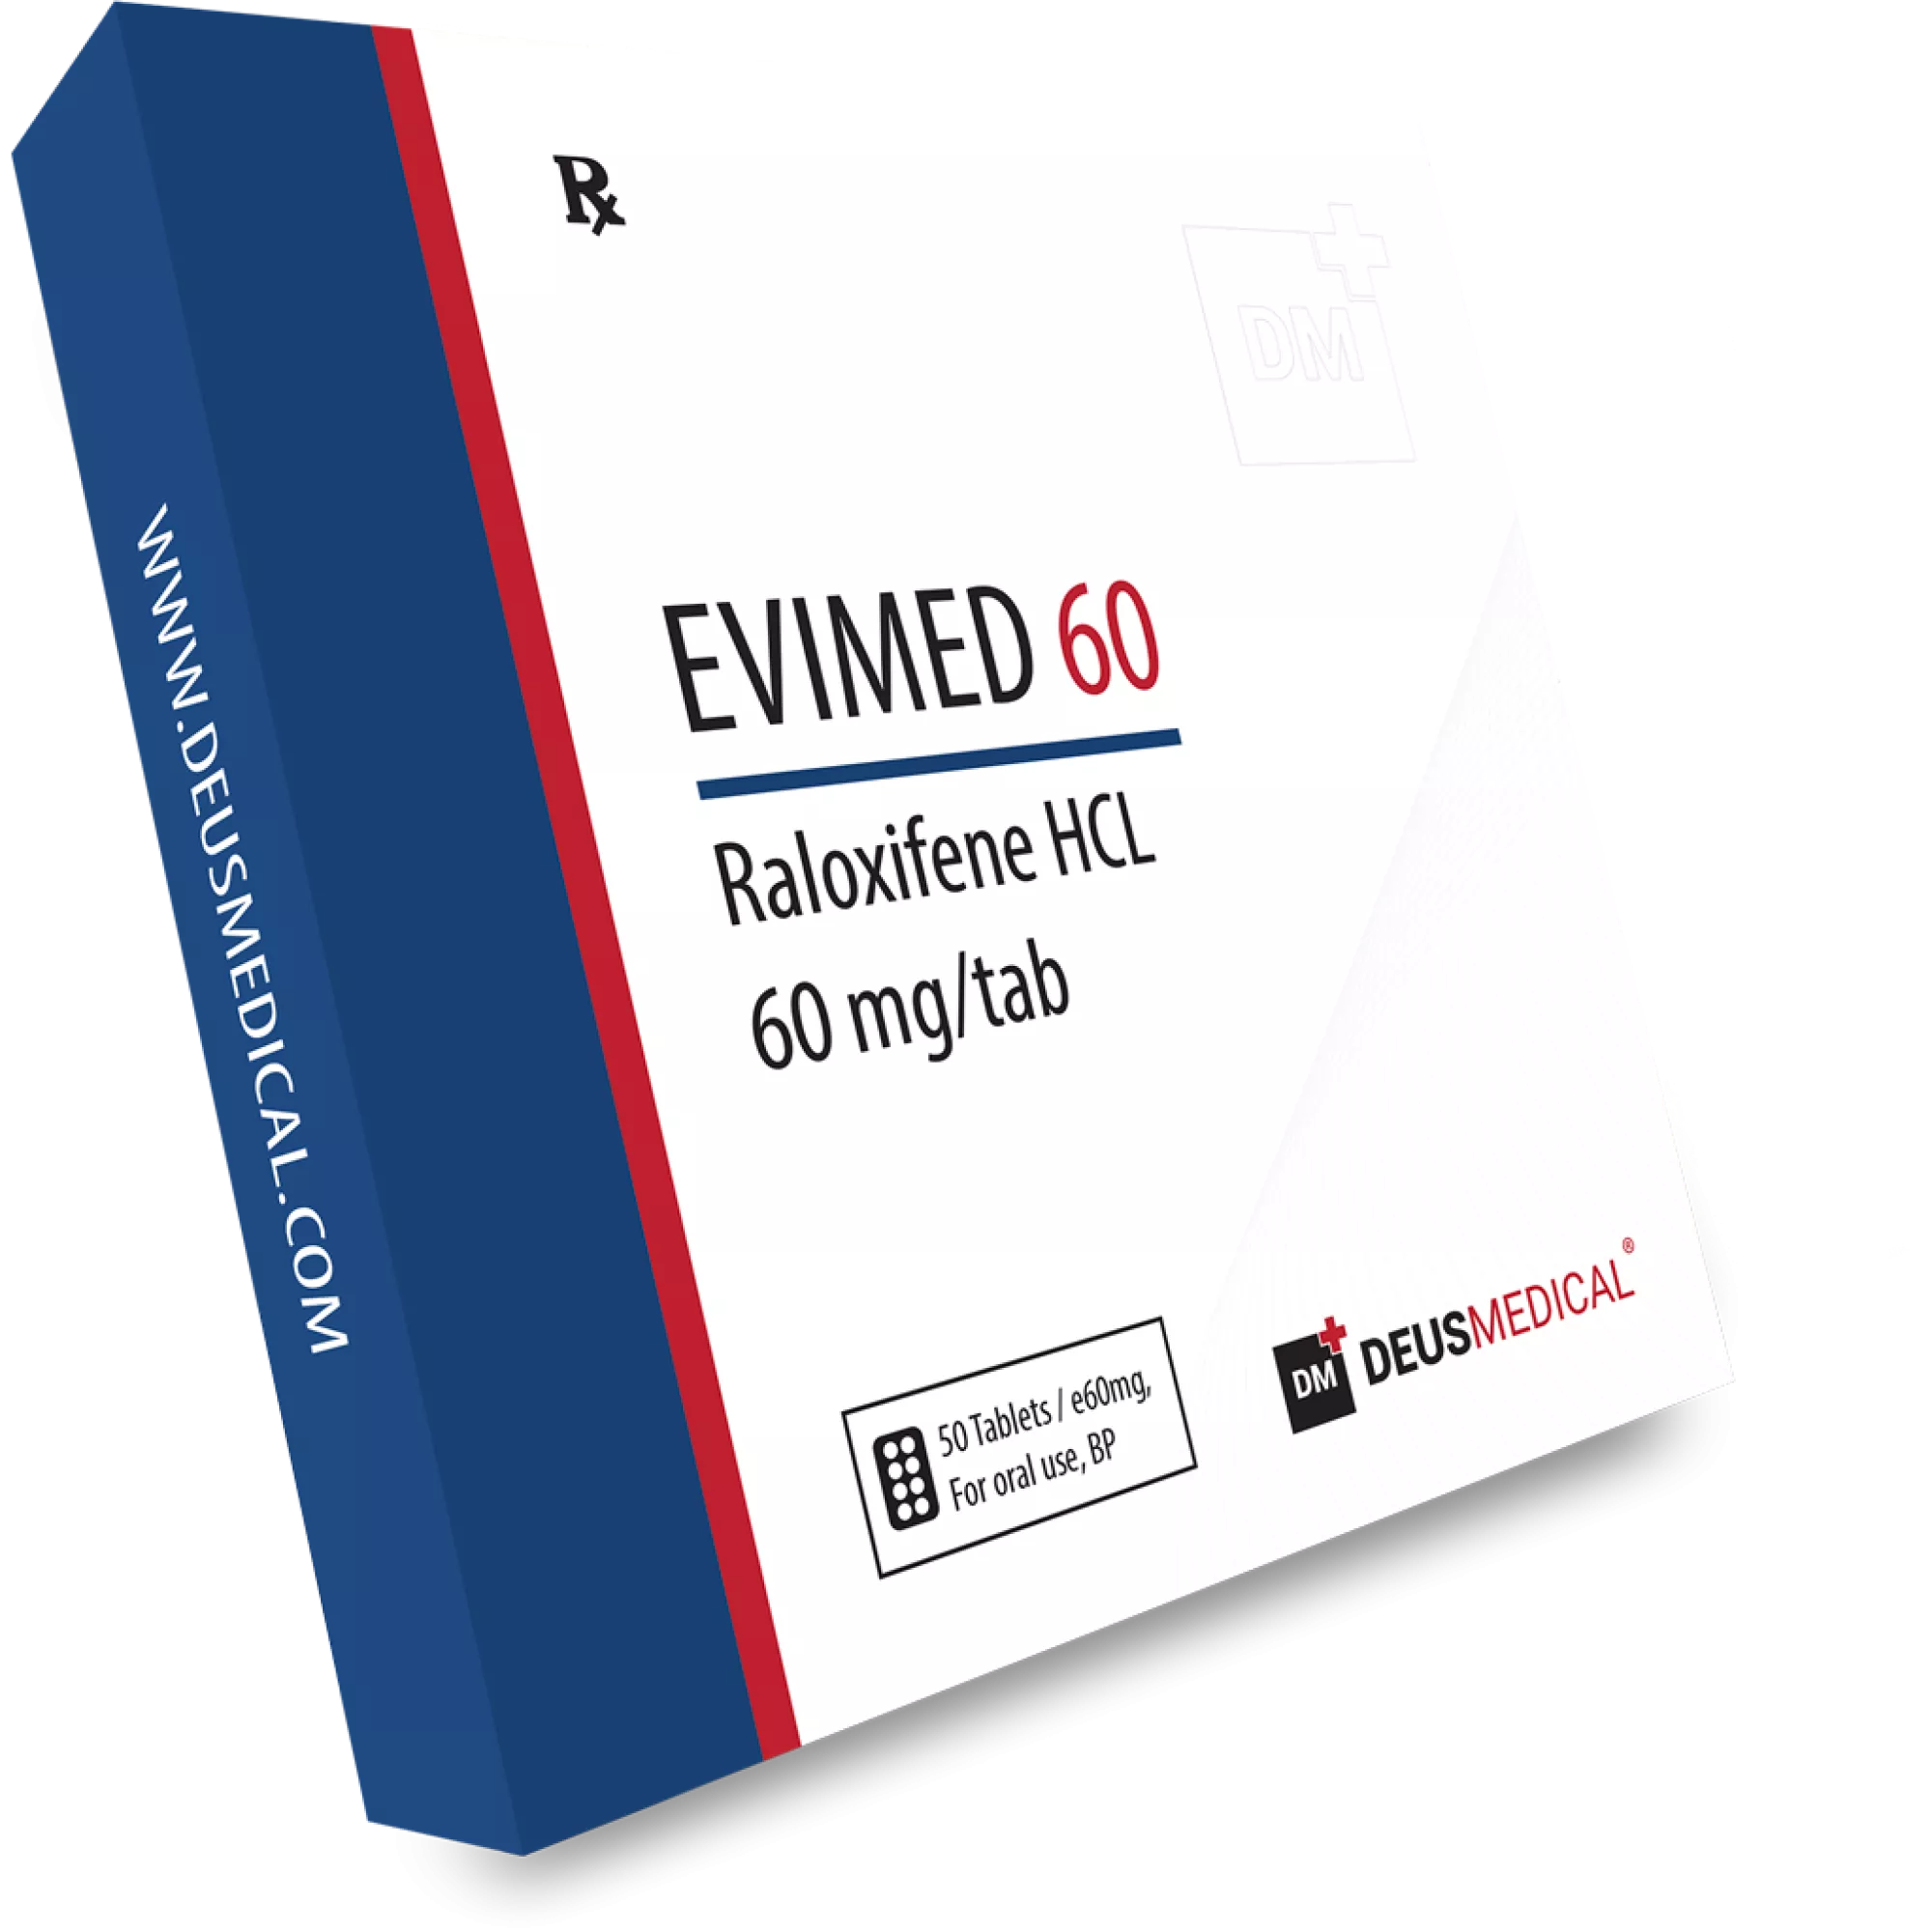 EVIMED 60 (Raloxifene HCL), Deus Medical, köp steroider online - www.deuspower.shop